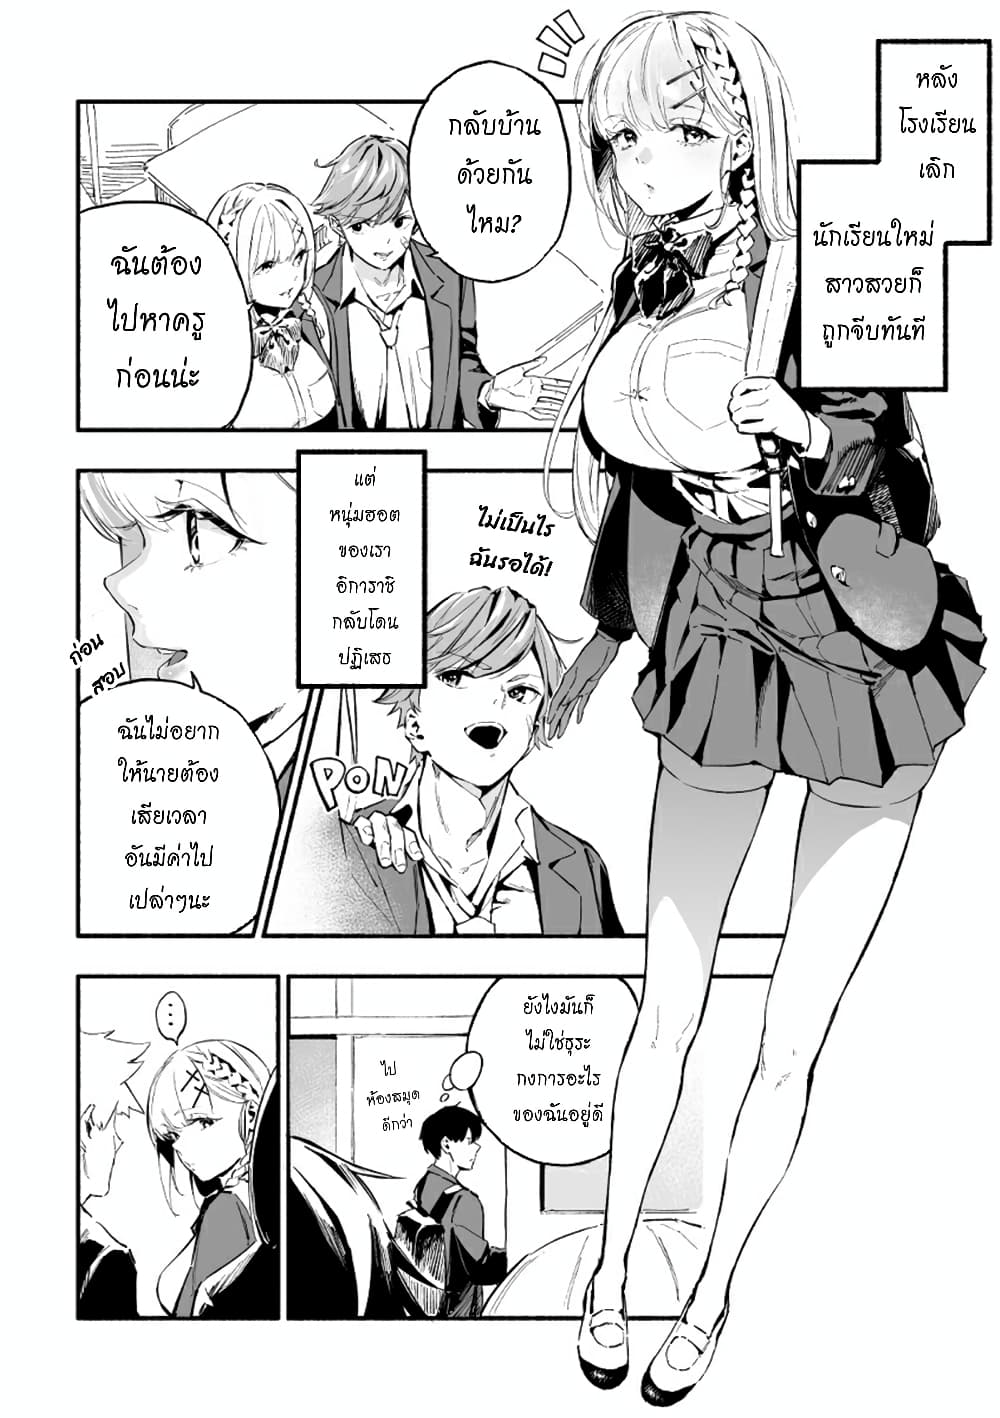 The Angelic Transfer Student and Mastophobia kun 3 (1)